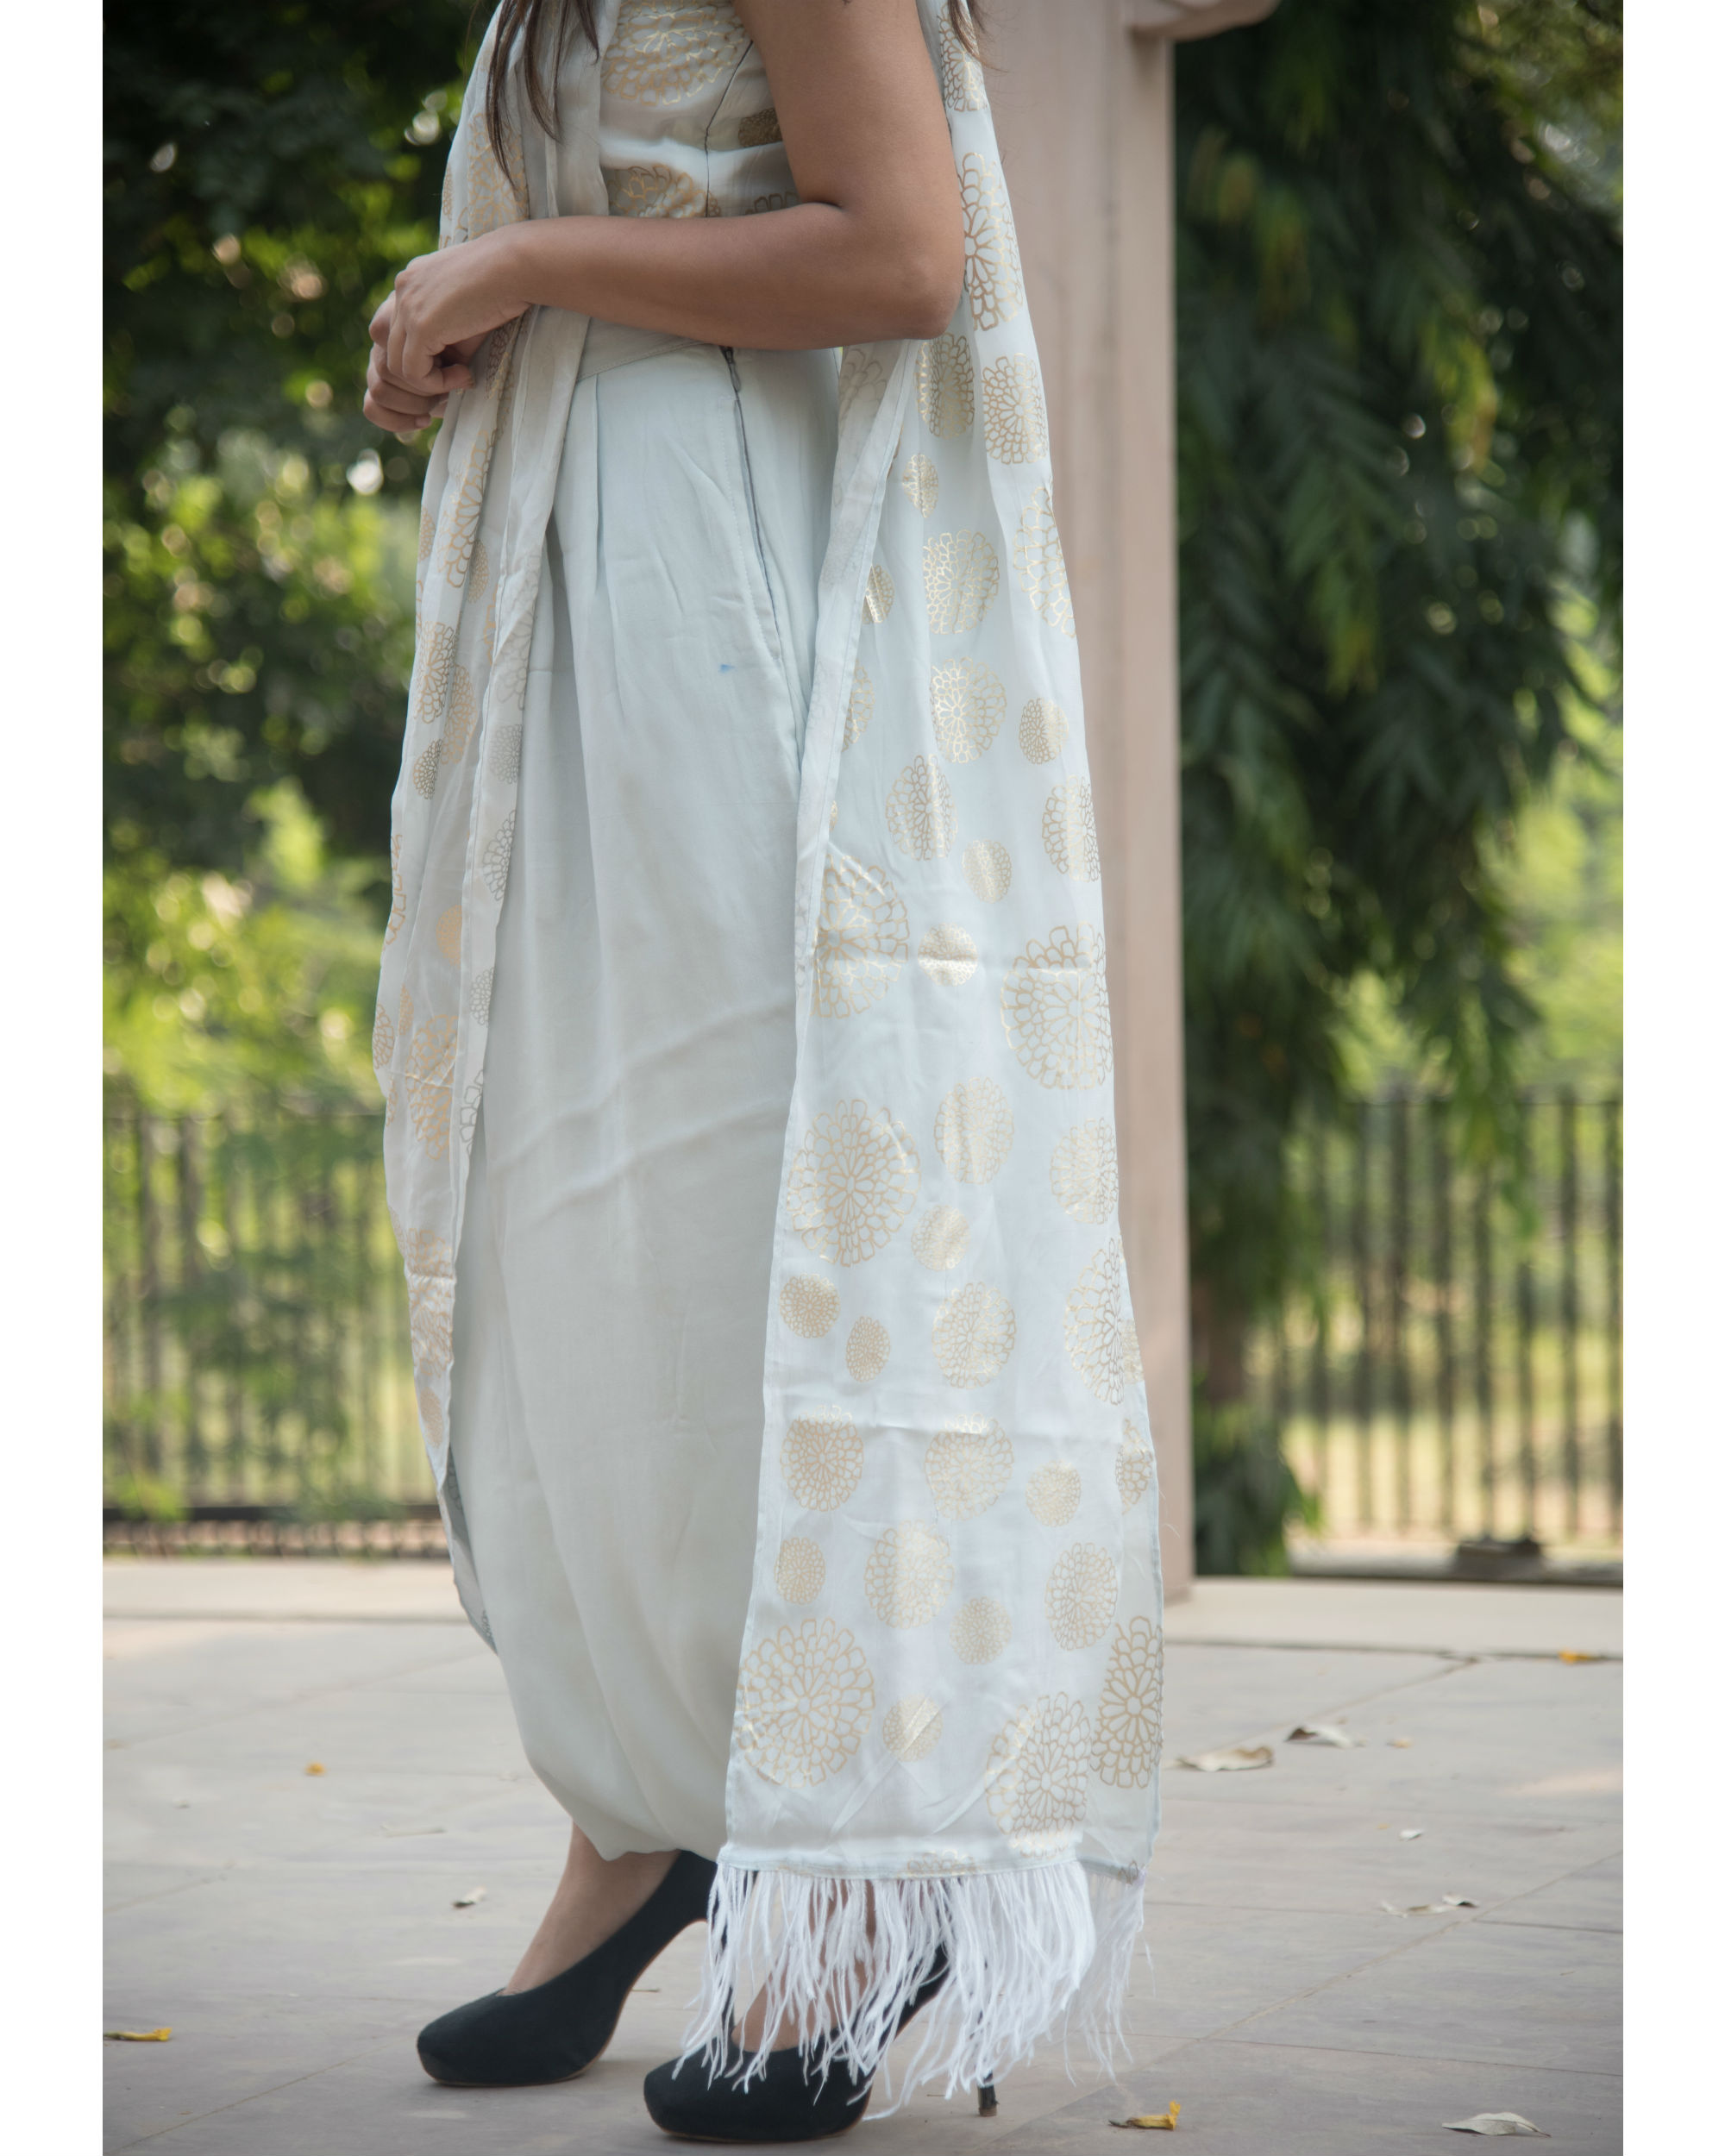 Grey dhoti sari by Label Nitika | The Secret Label